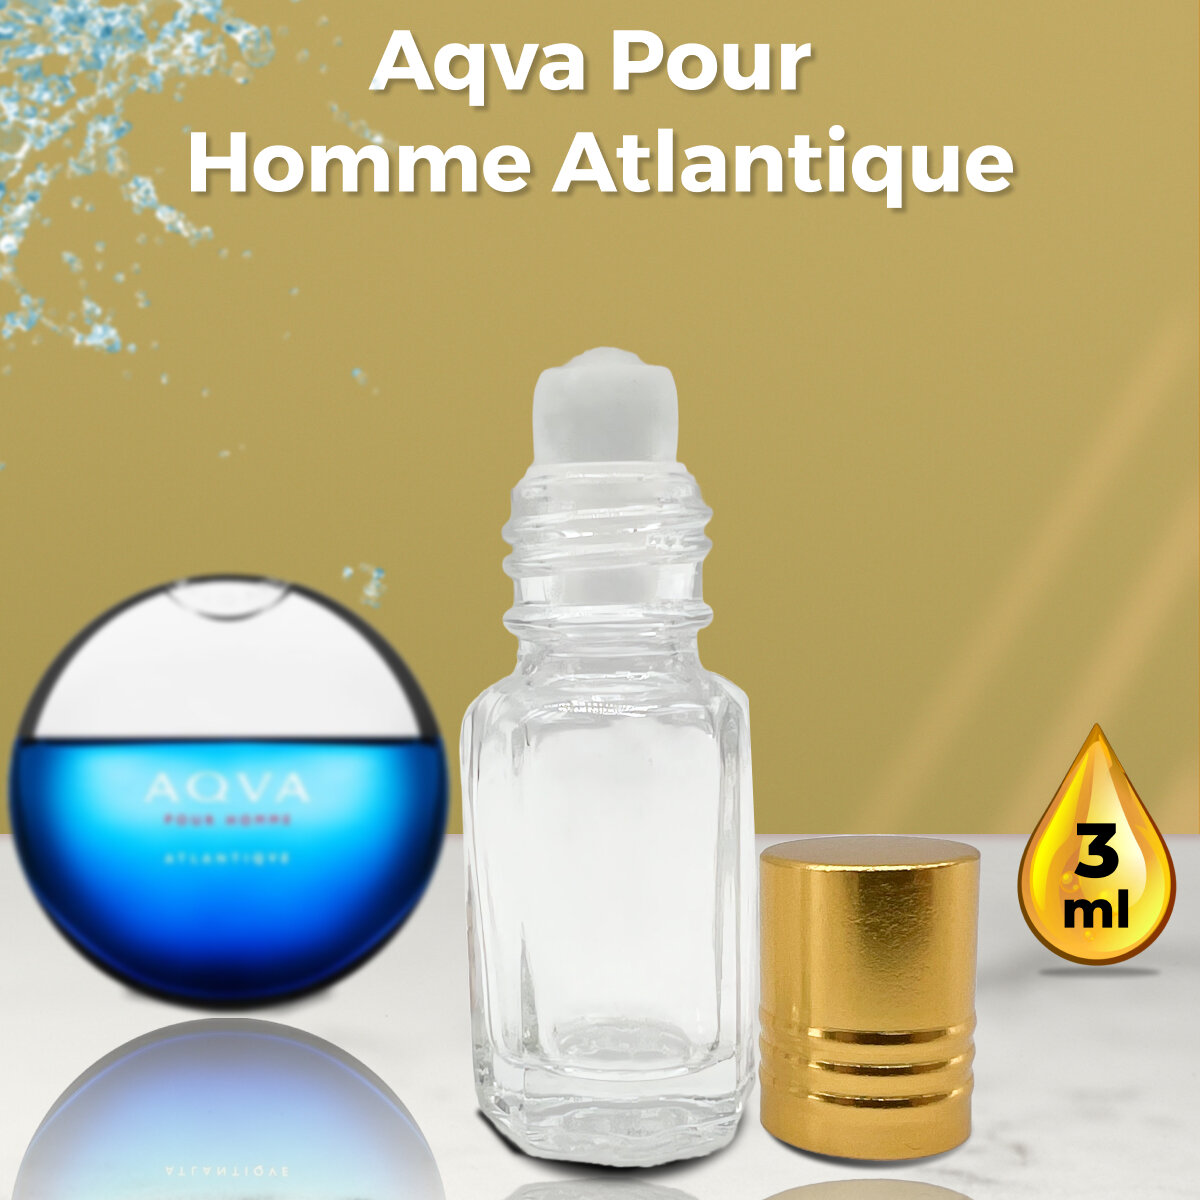 "Aqua Pour Homme Atlantique" - Духи мужские 3 мл + подарок 1 мл другого аромата